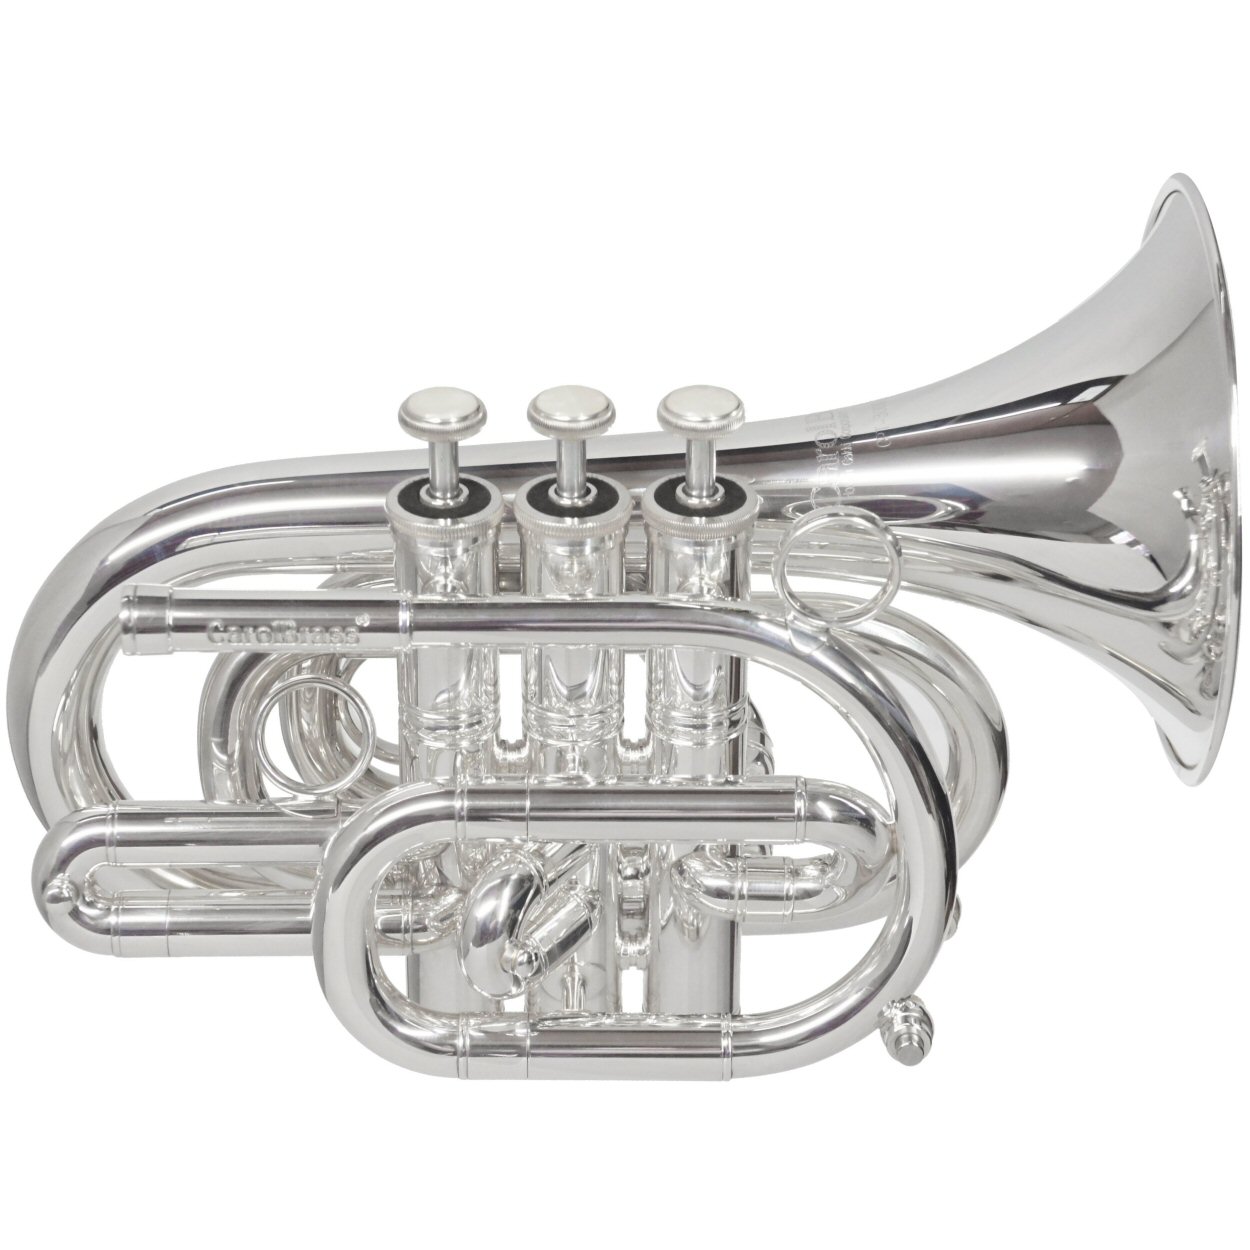 Carol Brass Pocket Trumpet CPT-3000-GLS - Trumpets for students to